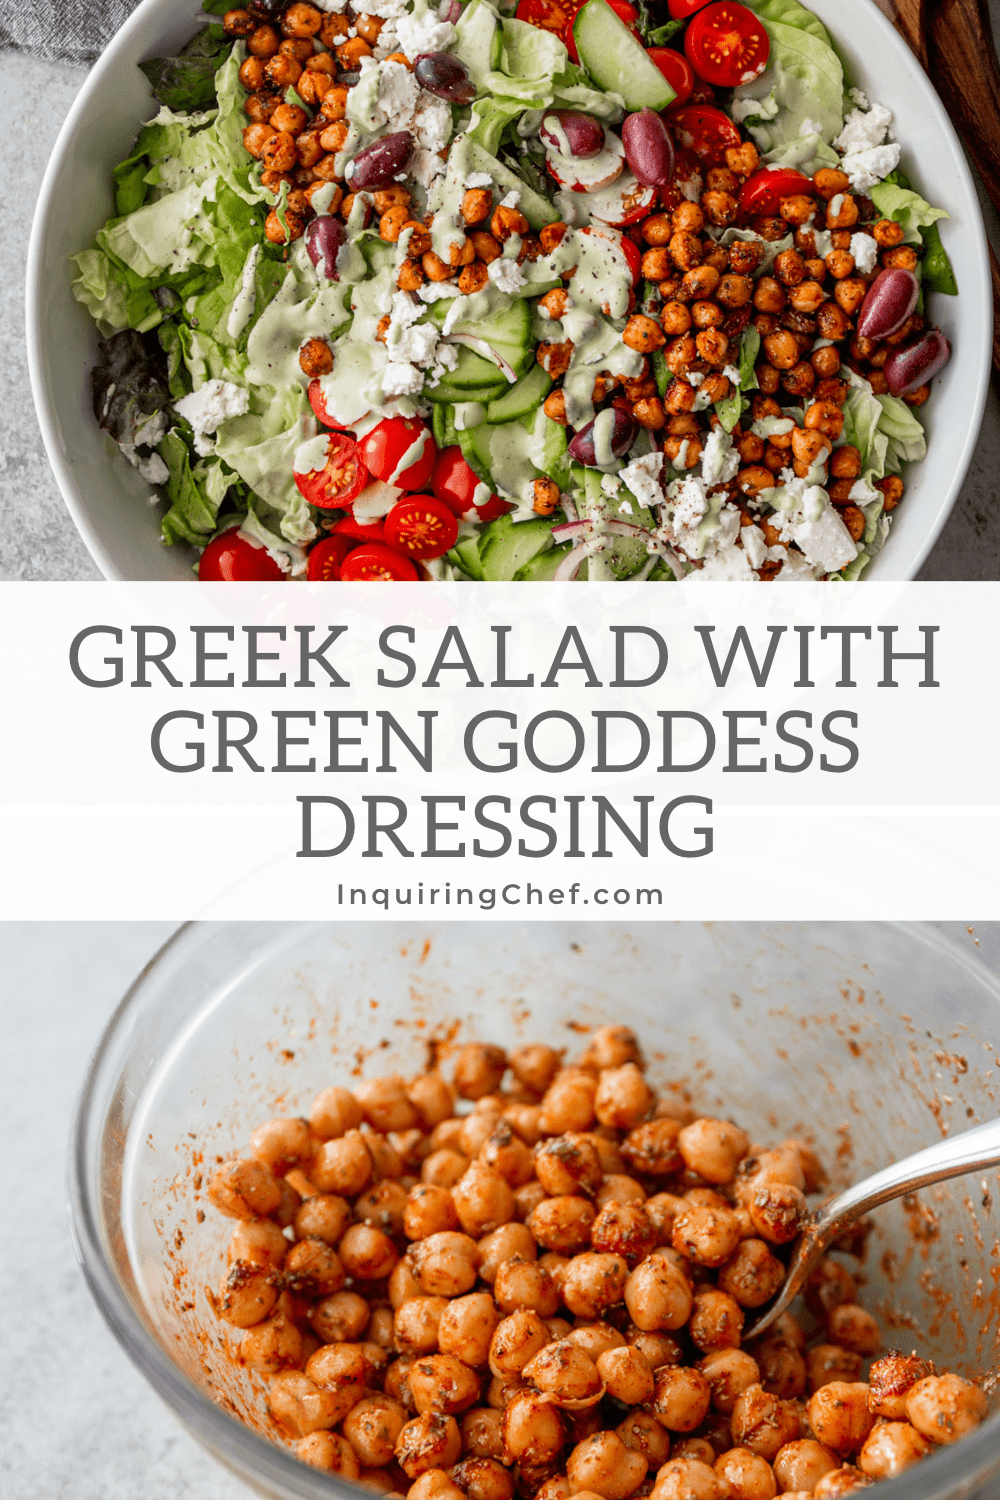 greek goddess salad